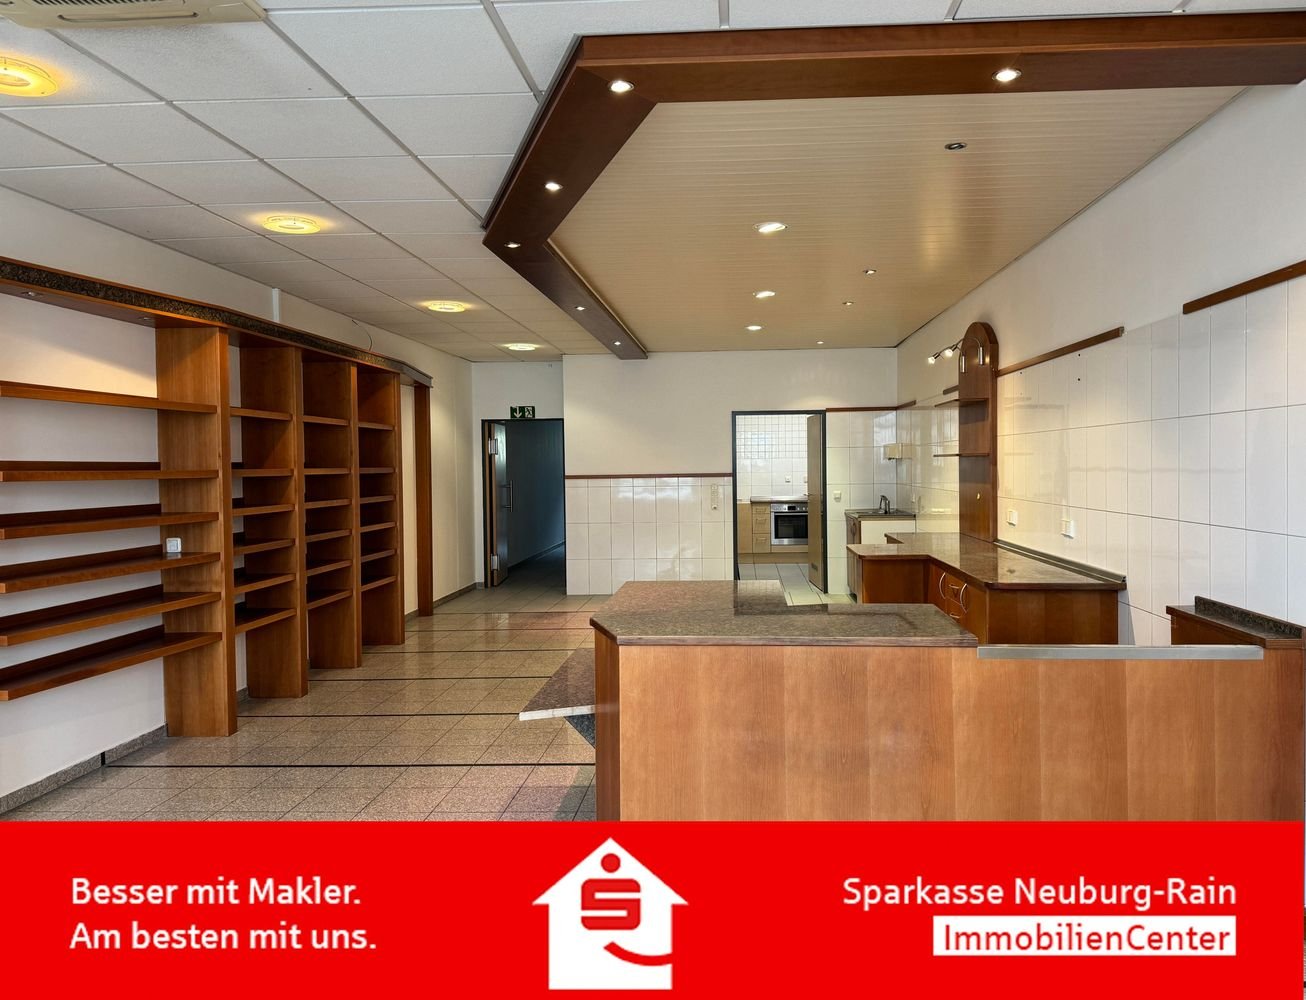 Ladenlokal in Ehekirchen - 750,00 EUR Kaltmiete, in Ehekirchen (PLZ: 86676)